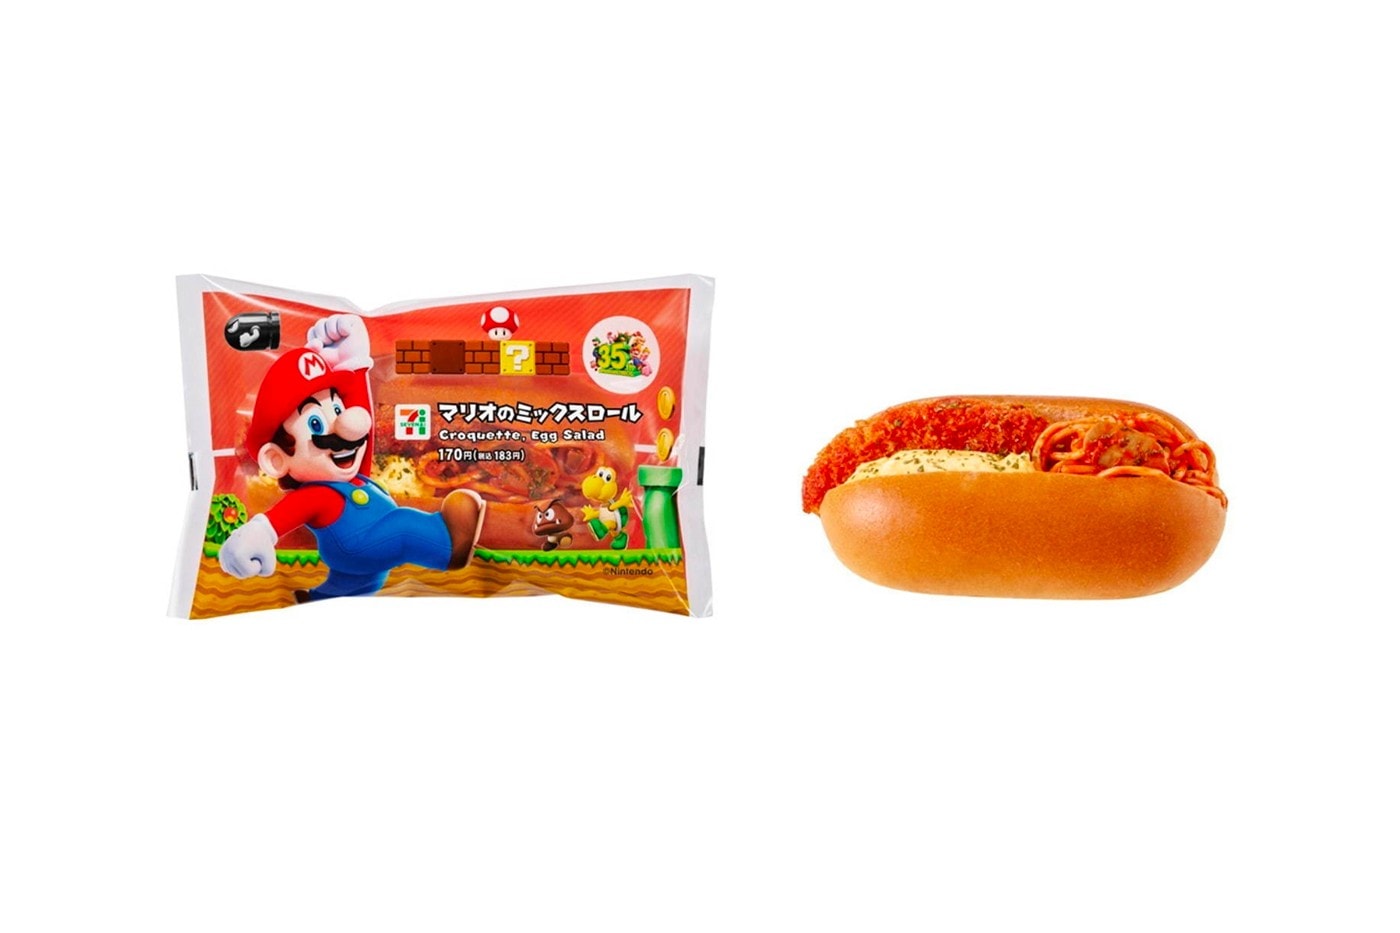 7-Eleven Japan Super Mario Bros. Themed Food Release Anniversary Celebration